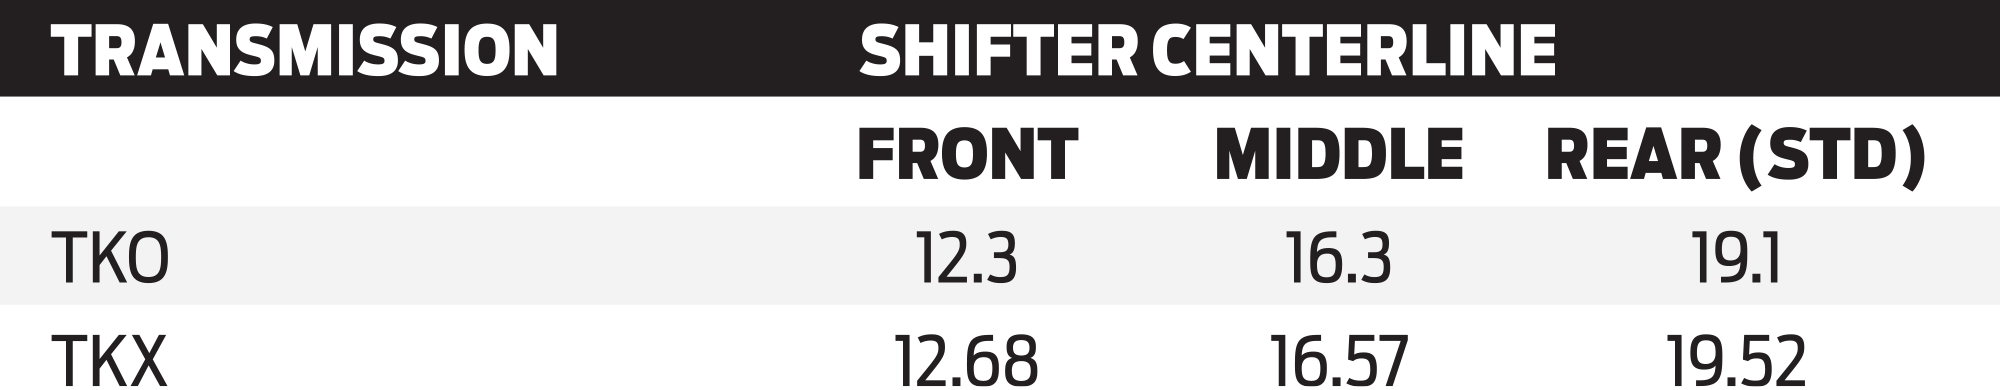 Transmission chart comparing shifter centerlines